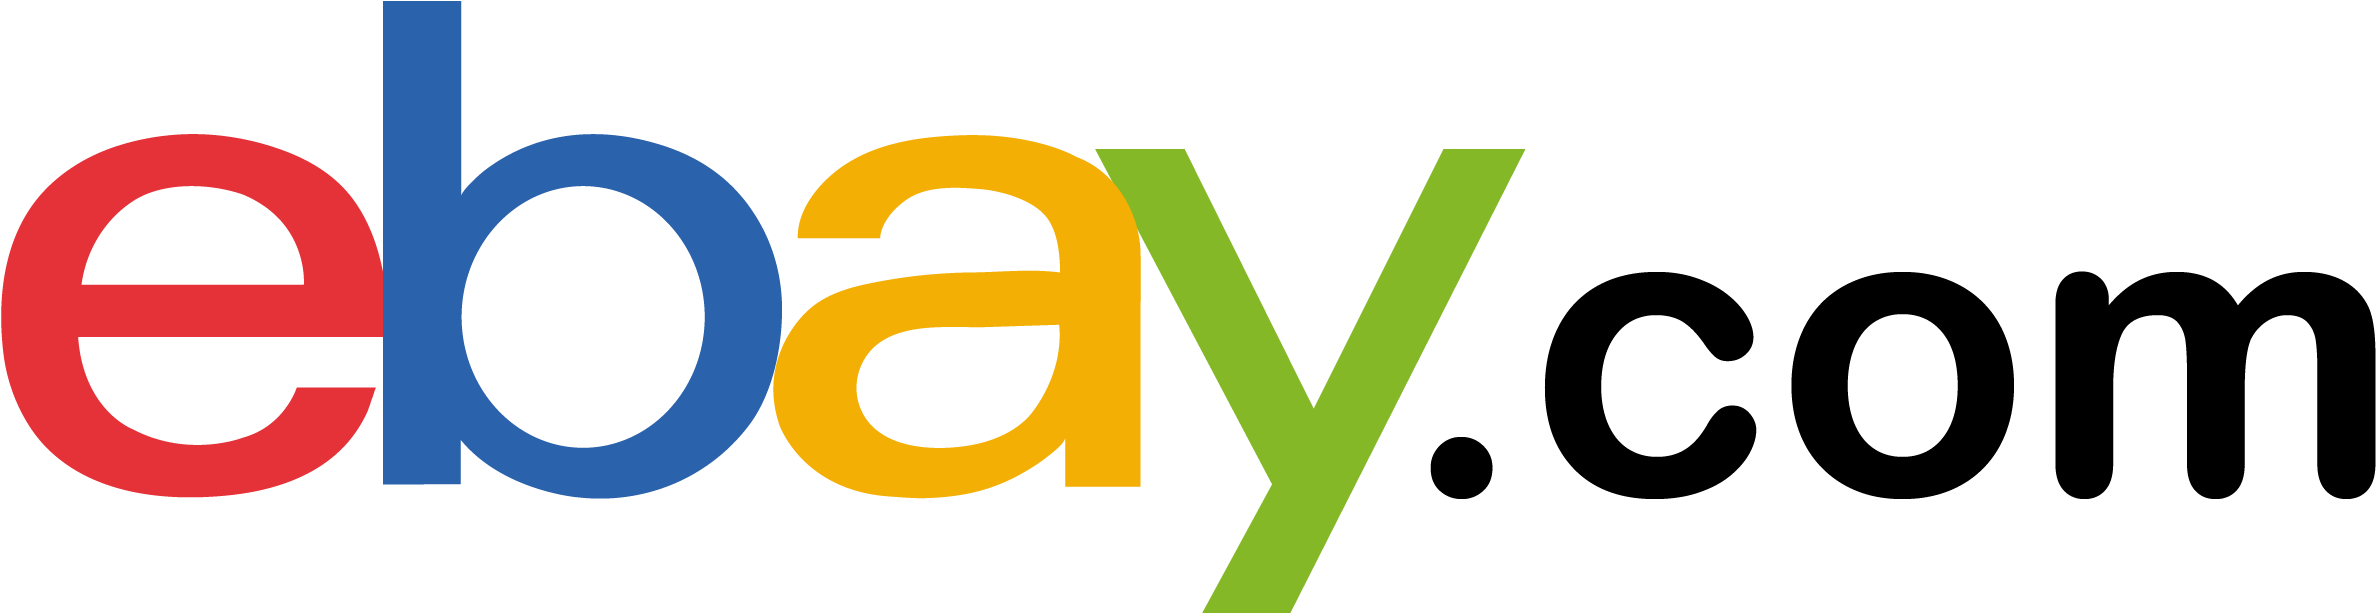 eBay PNG Background